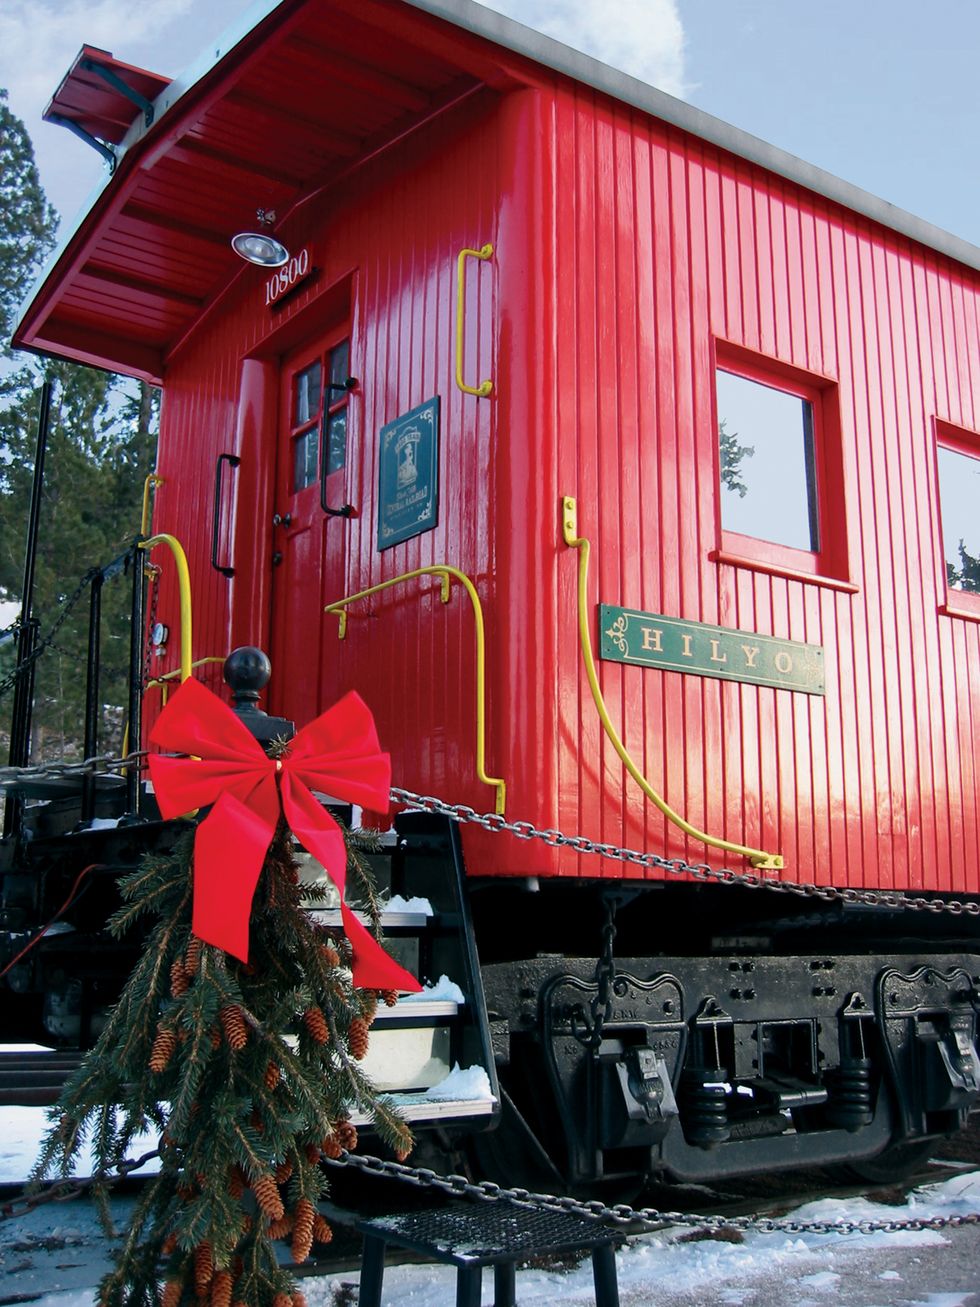 Classic Toy Trains Magazine The Polar Express! Nov/Dec Holiday